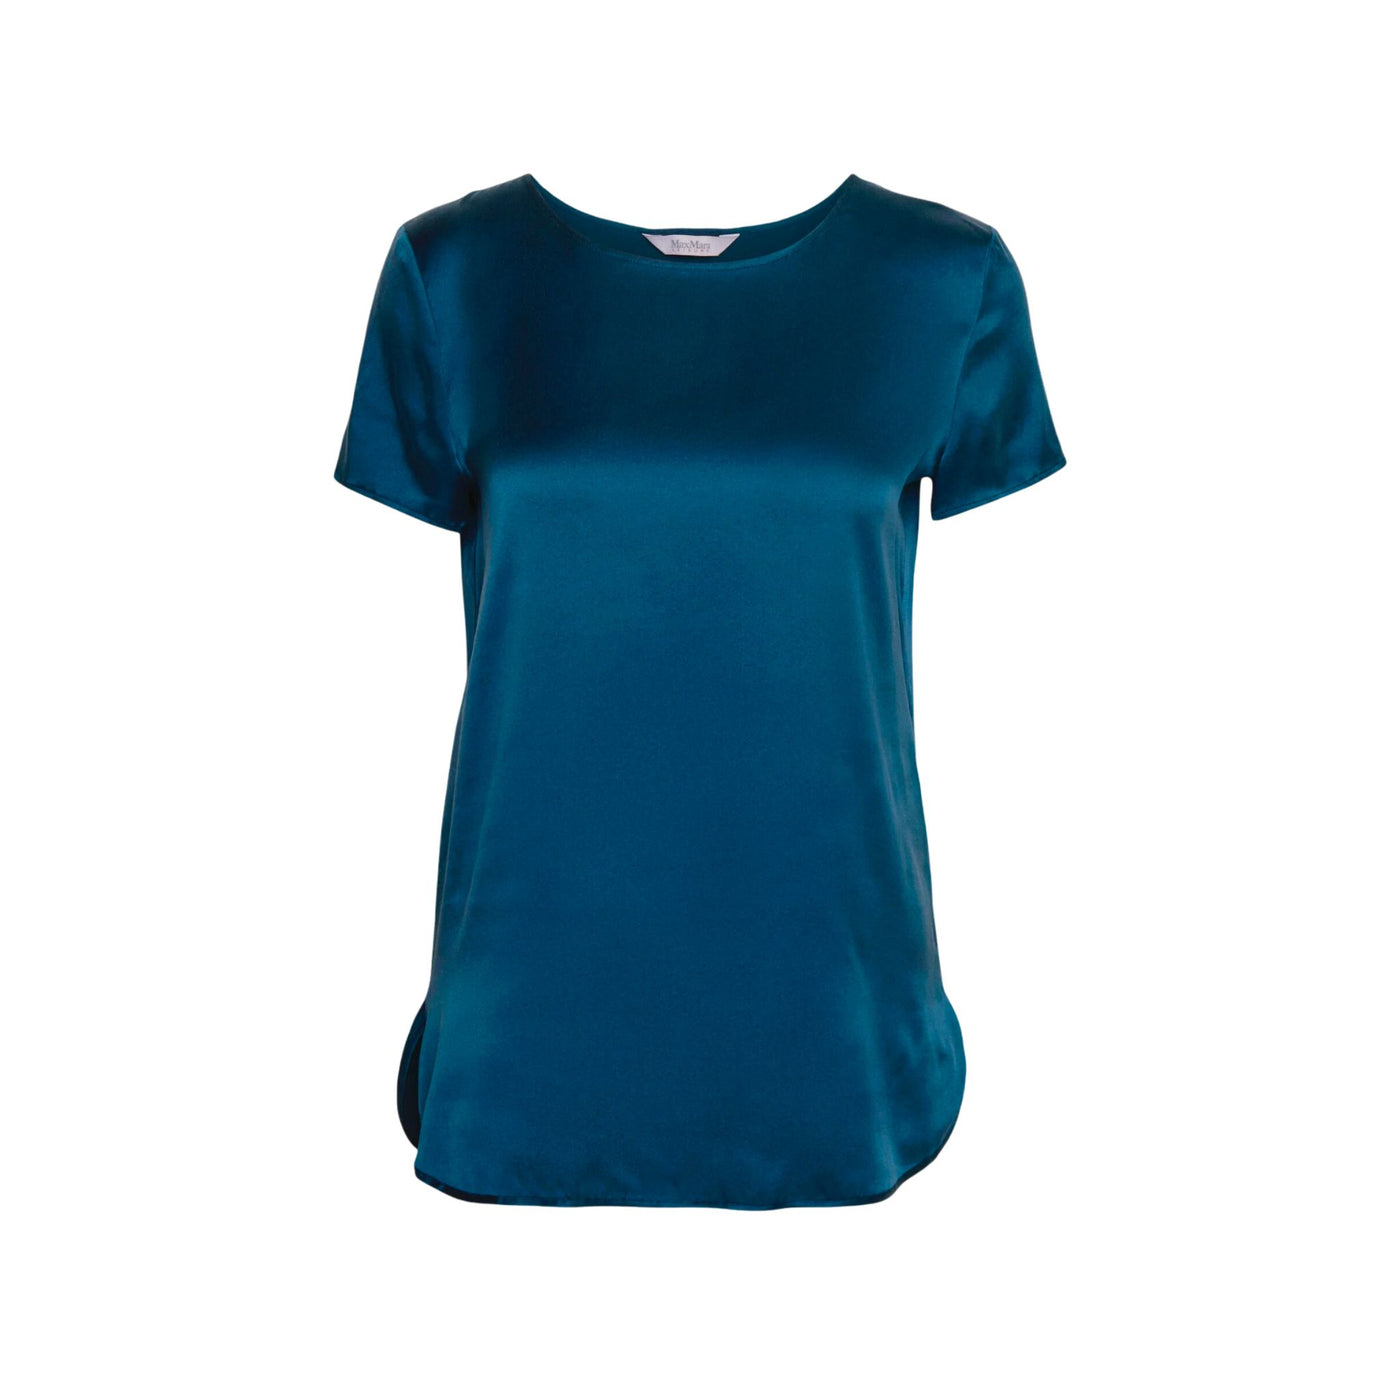 Glossy women's t-shirt with regular fit round neckline